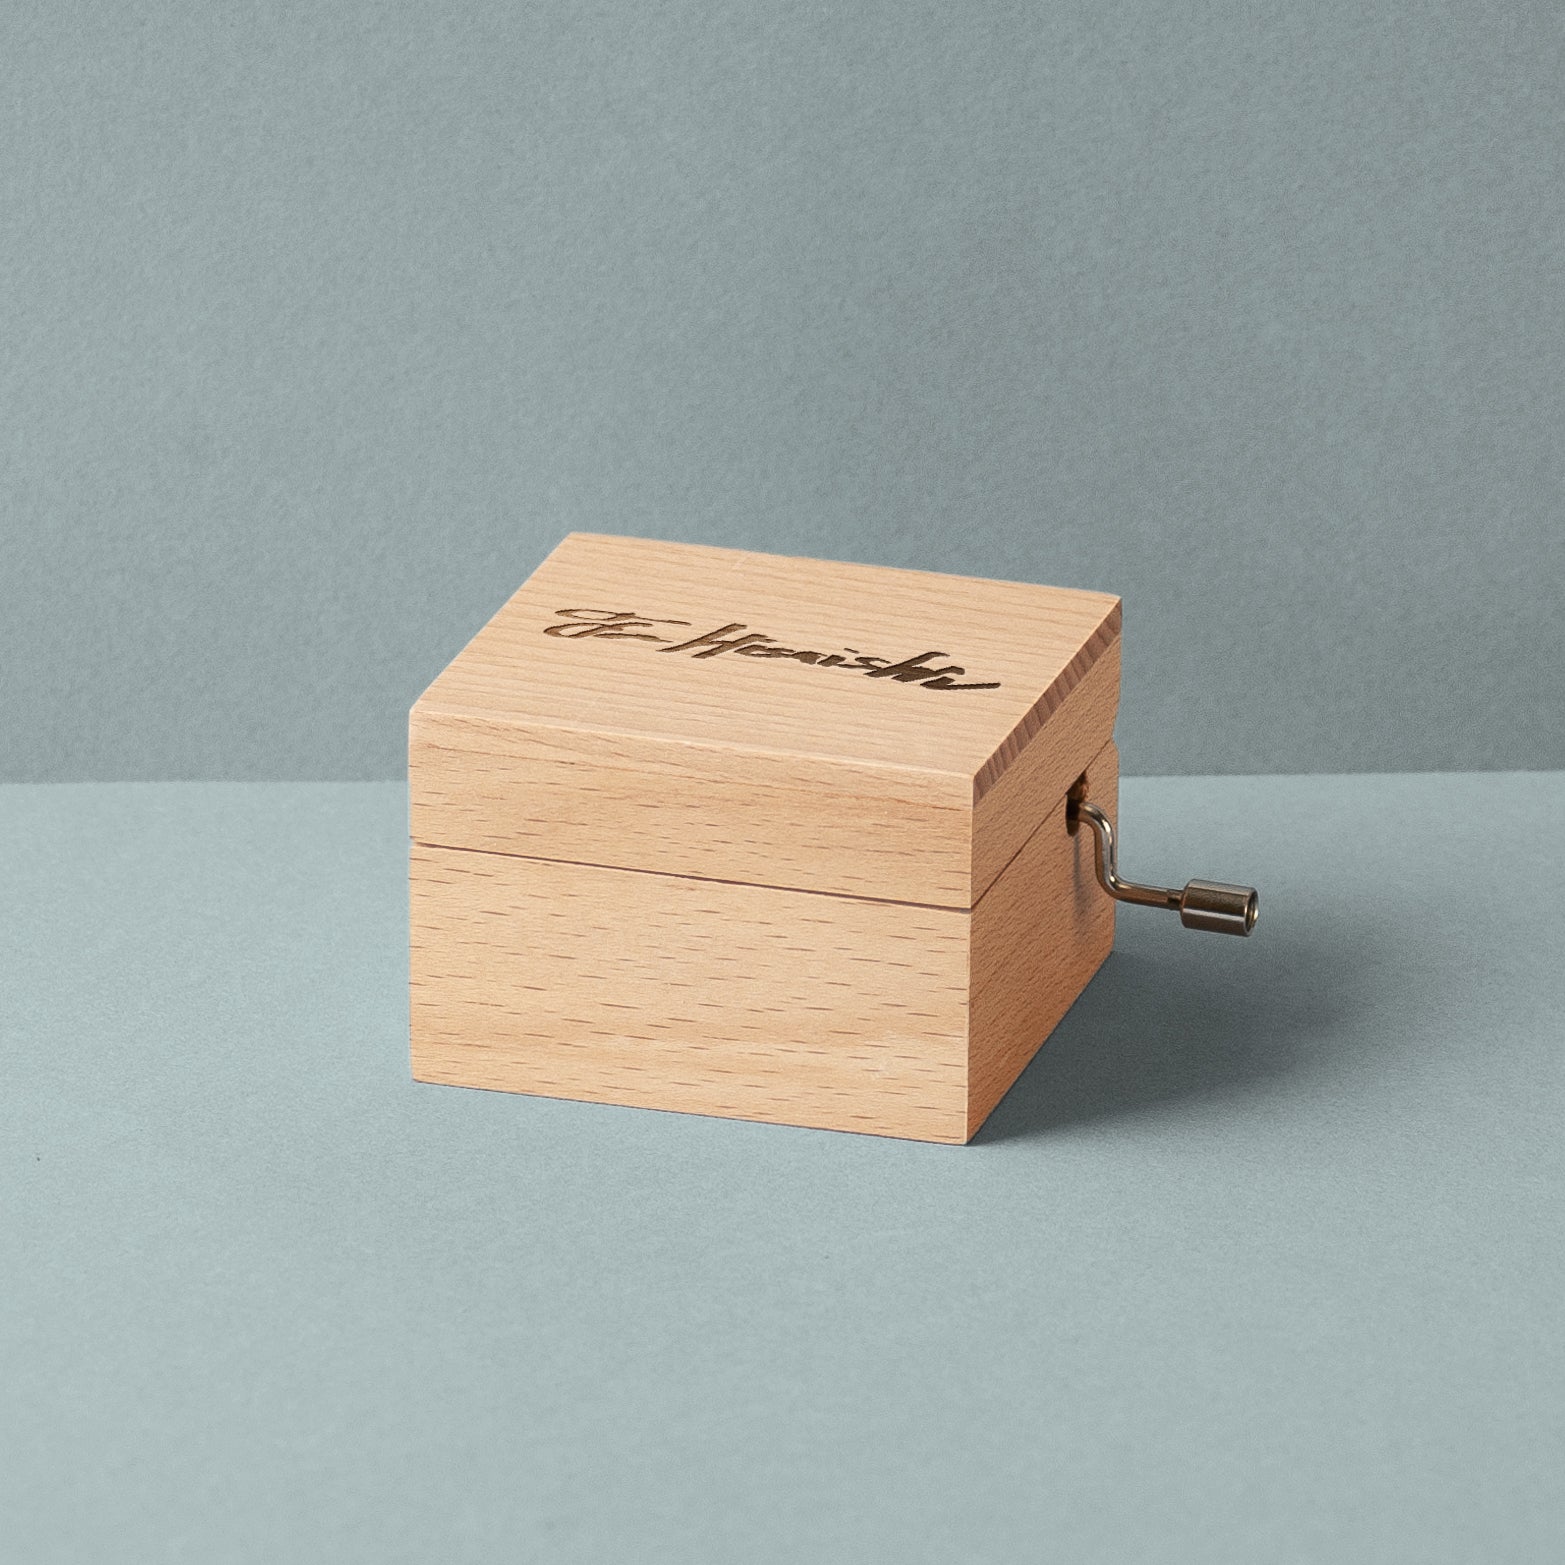 Music Box (“Kiki’s Delivery Service” Melody)